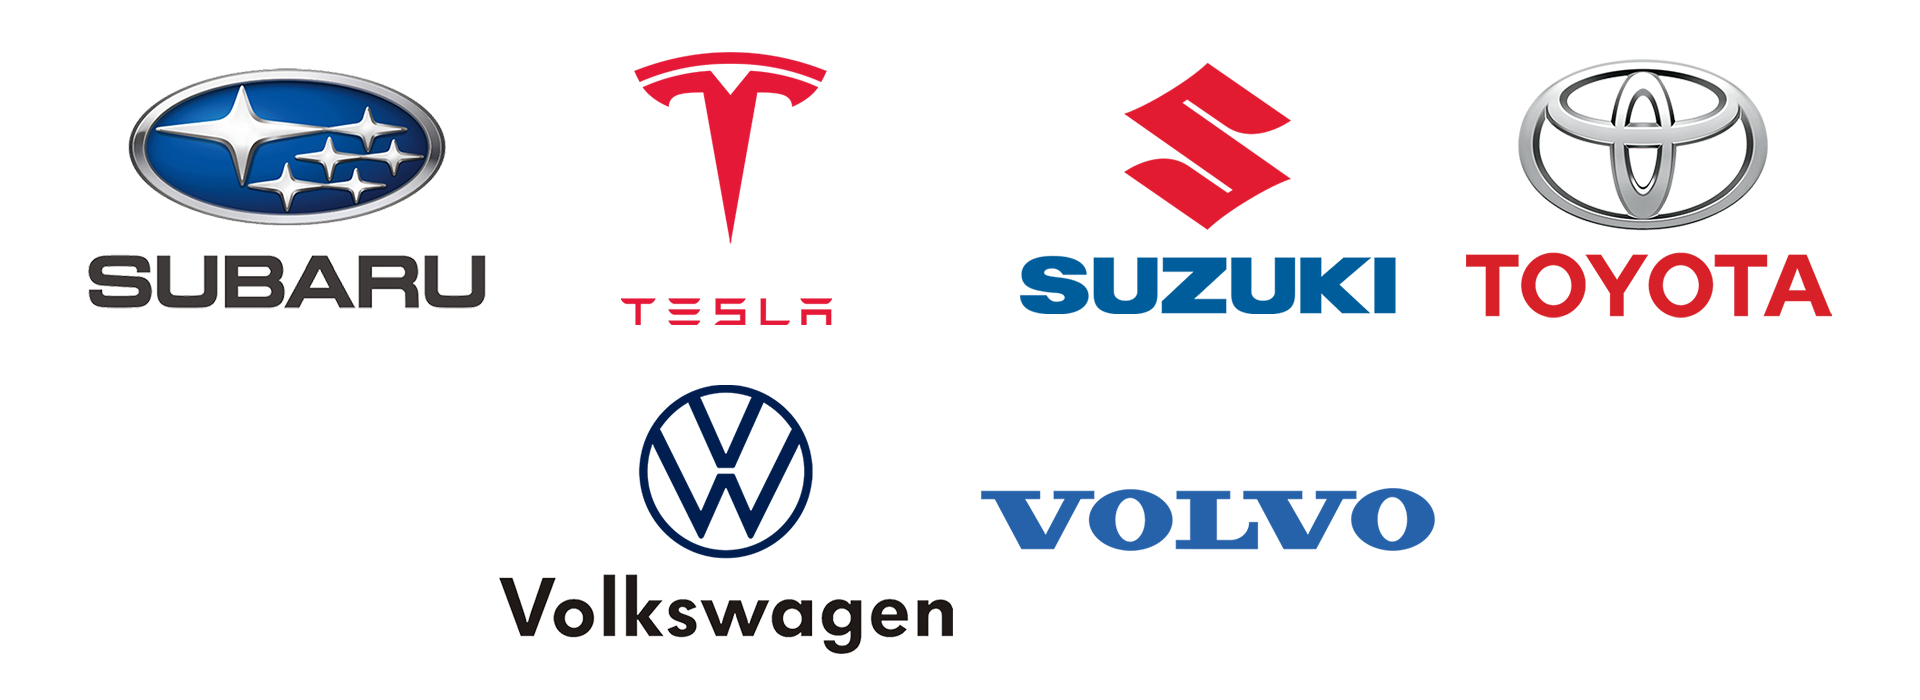 The logos for subaru , tesla , suzuki , toyota and volkswagen are shown on a white background.